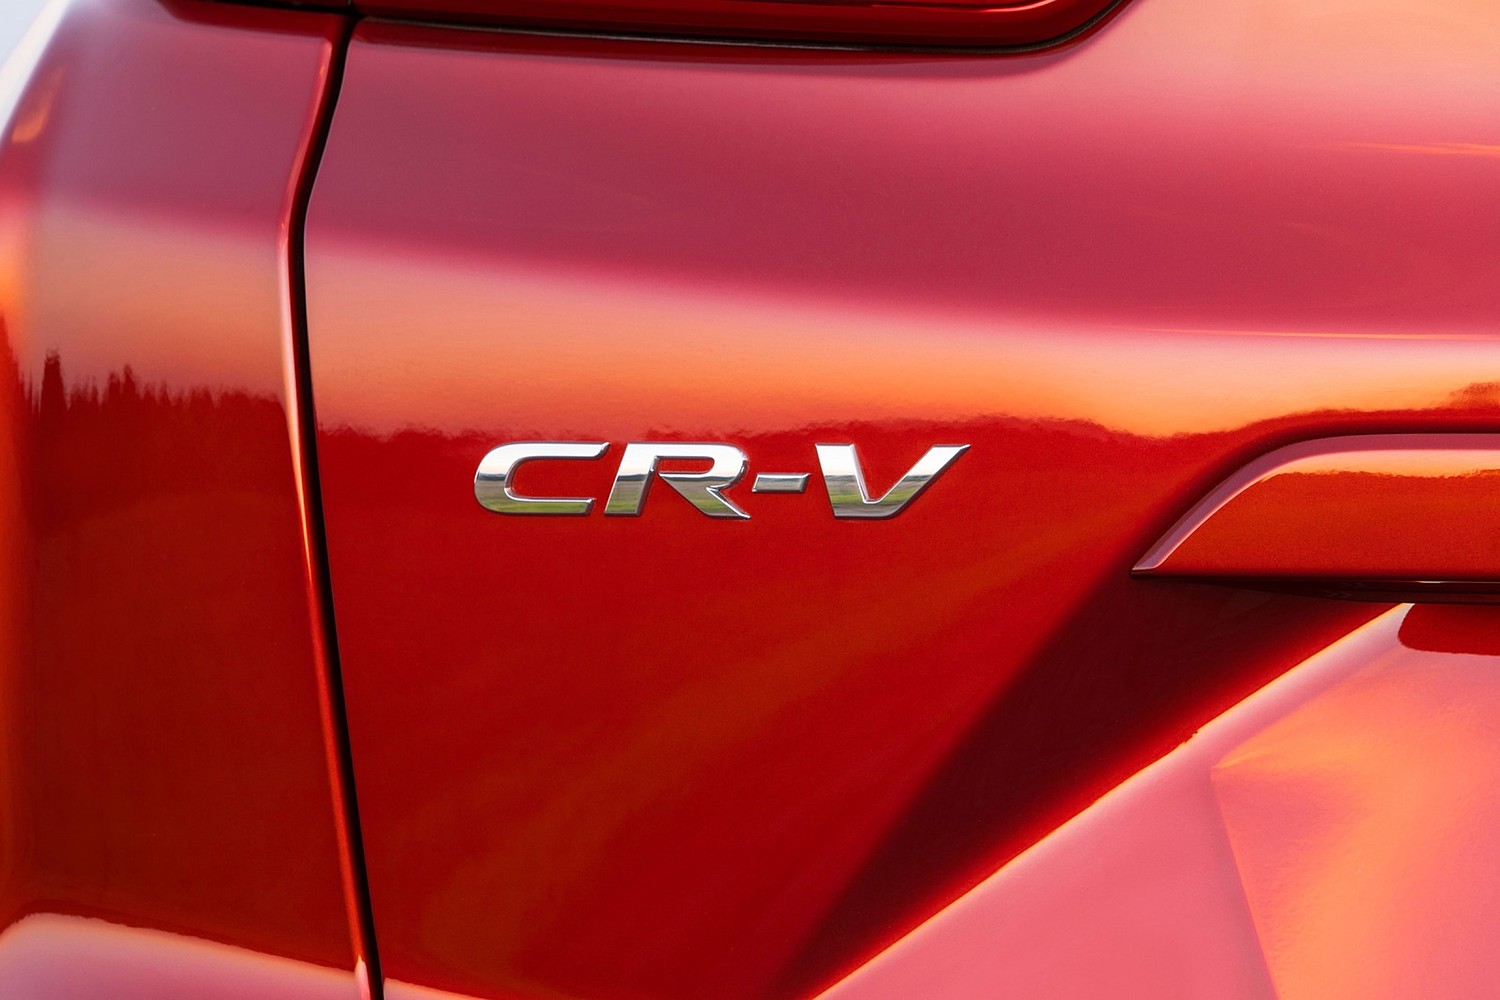 Honda CR-V Touring 4dr SUV Rear Badge (2017 model year shown)